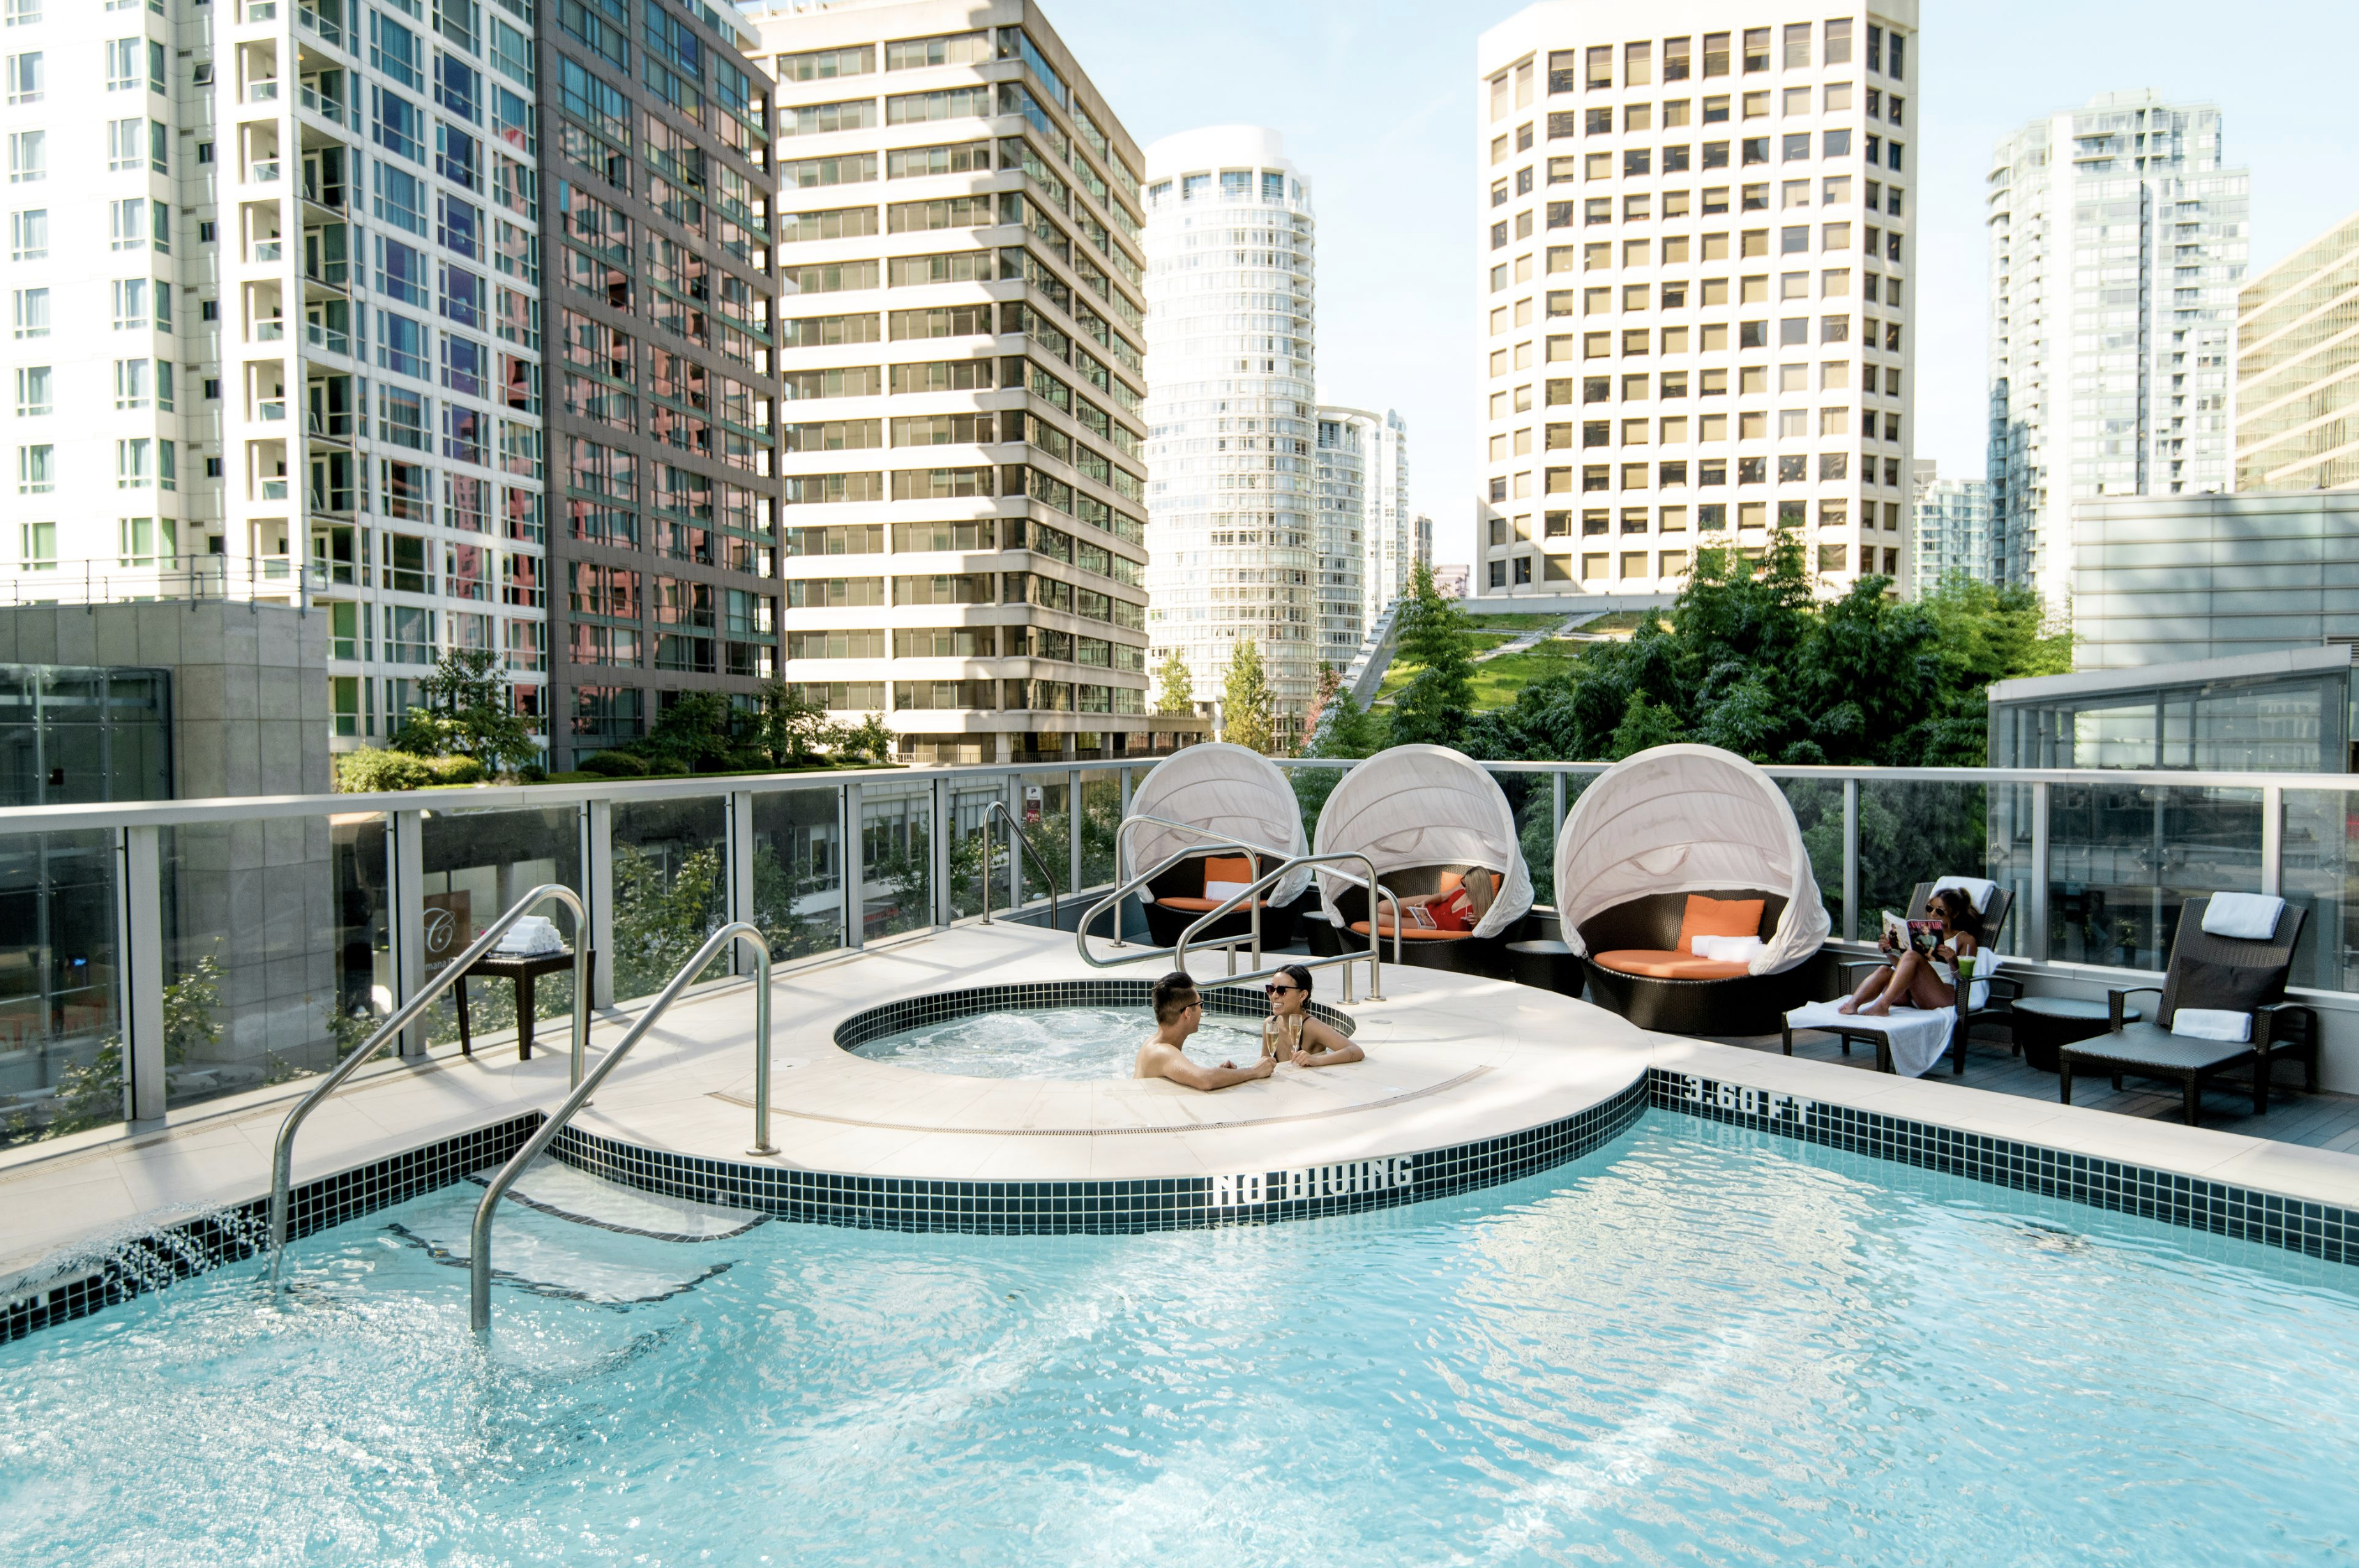 3. Shangri-La Vancouver - Outdoor pool, sun loungers